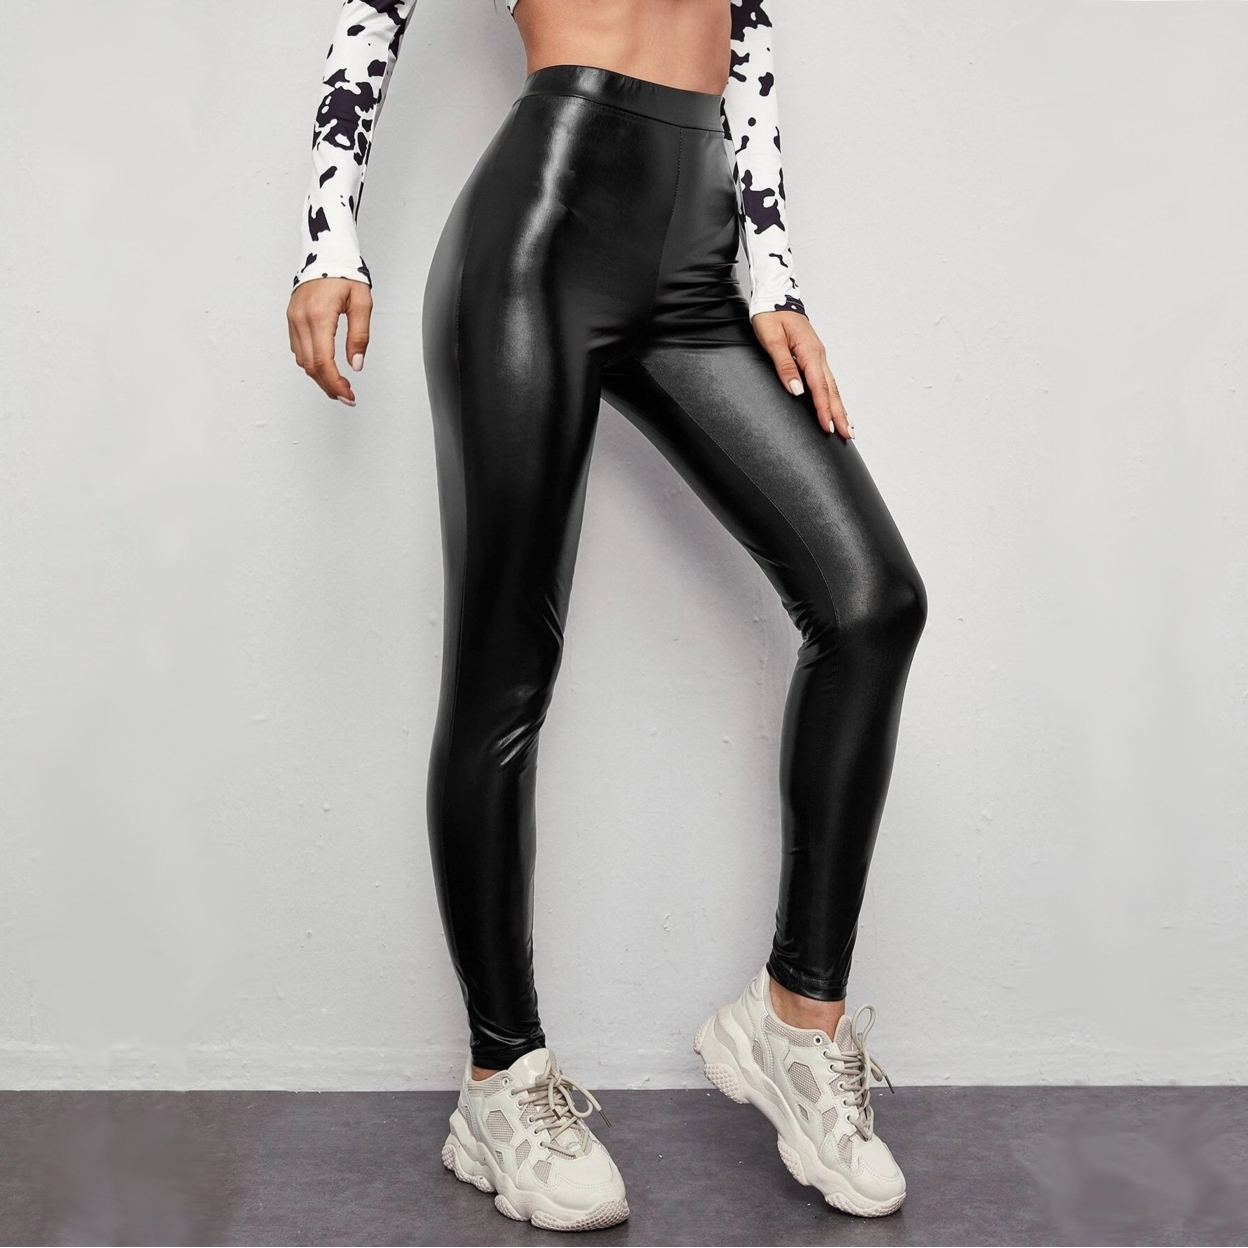 Leather Pants Women's High Waist Large Size Stretch Slim Slimming Feet Leggings - M